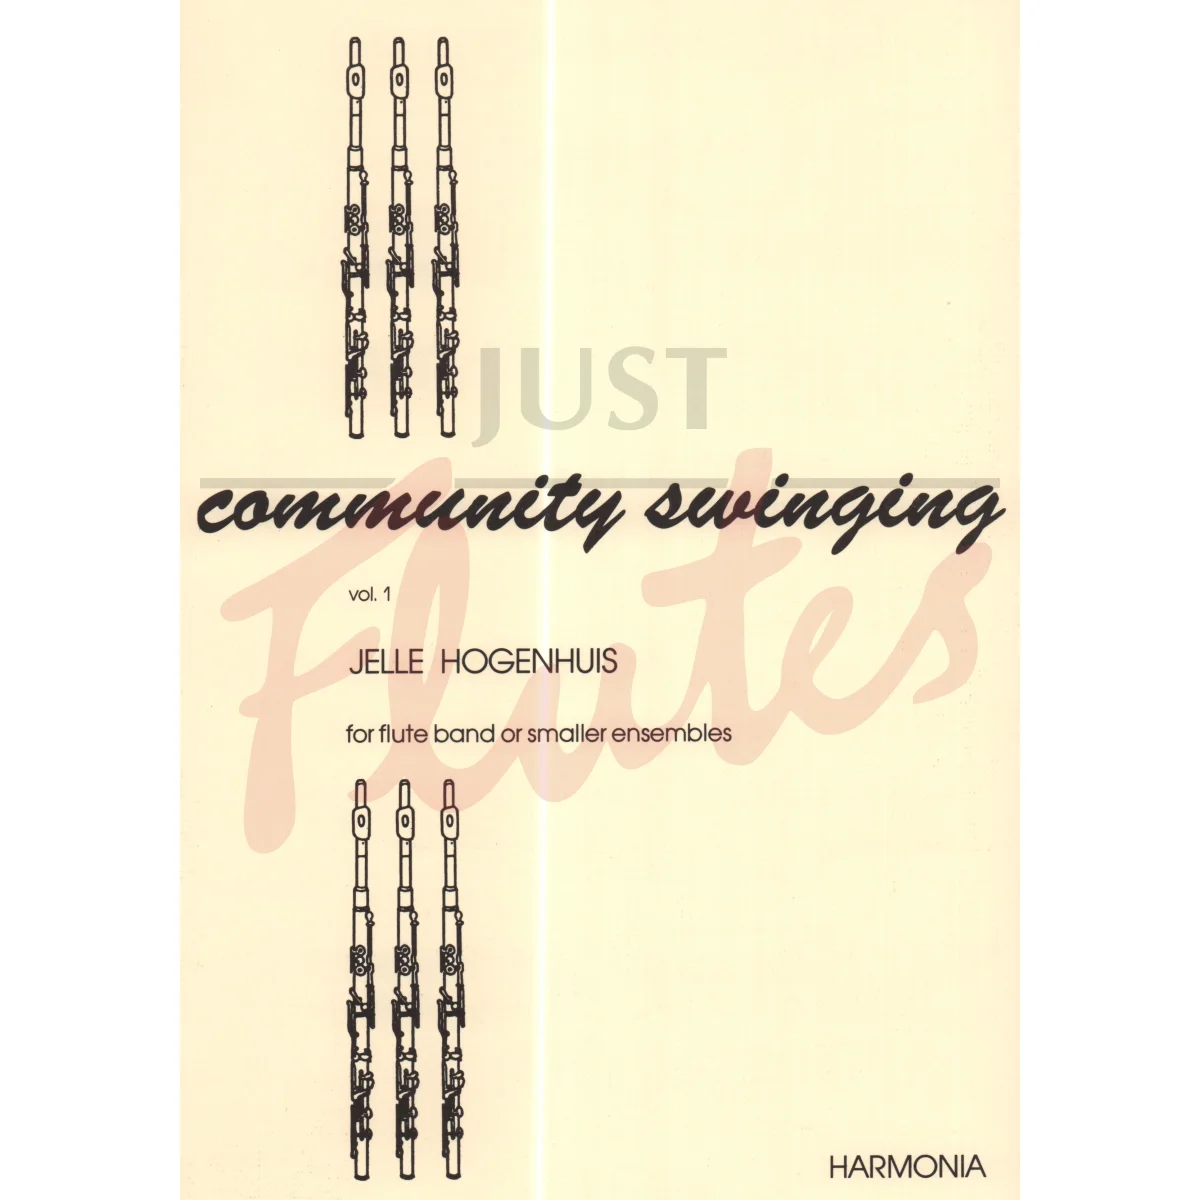 Community Swinging for Flute Band or Smaller Ensembles